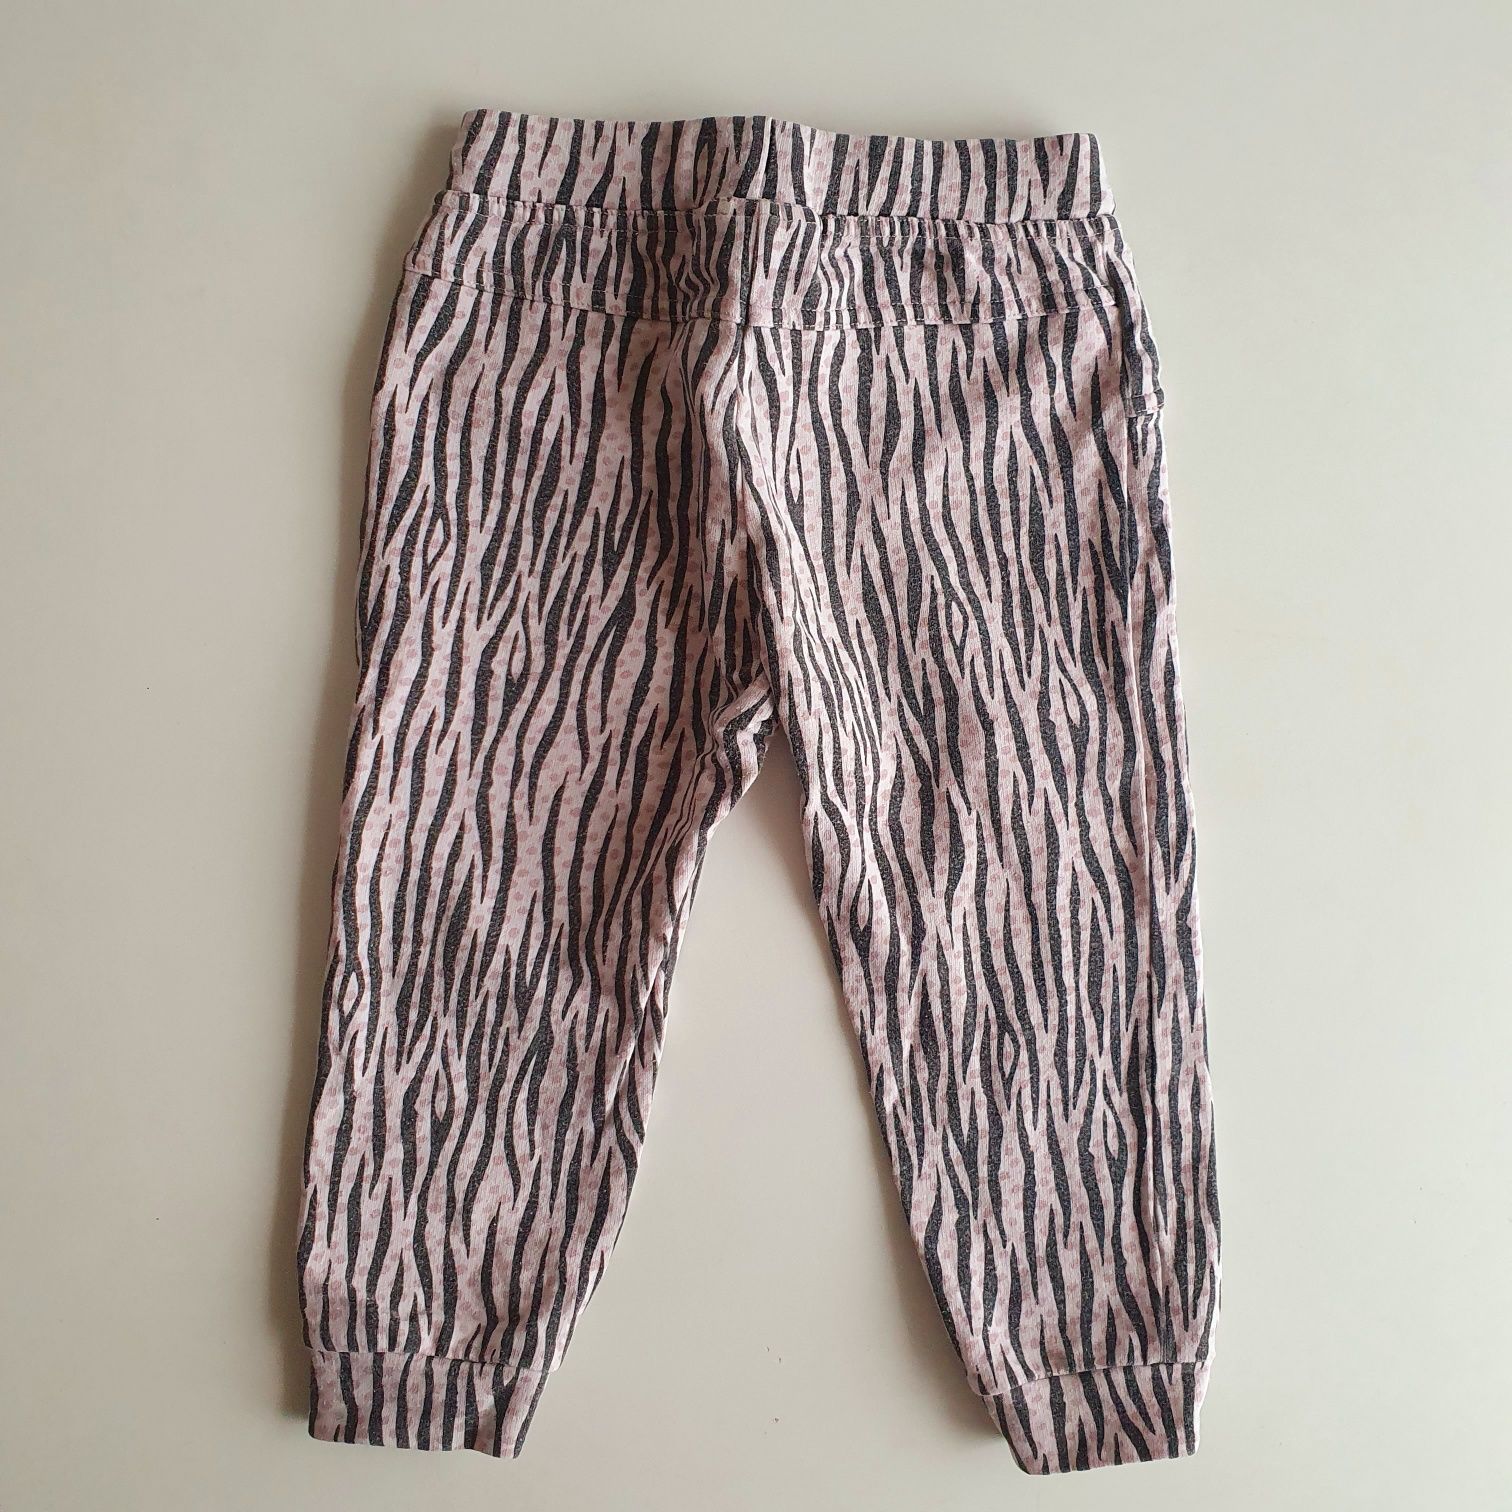 Spodnie od piżamy Coccodrillo roz.86, piżamka